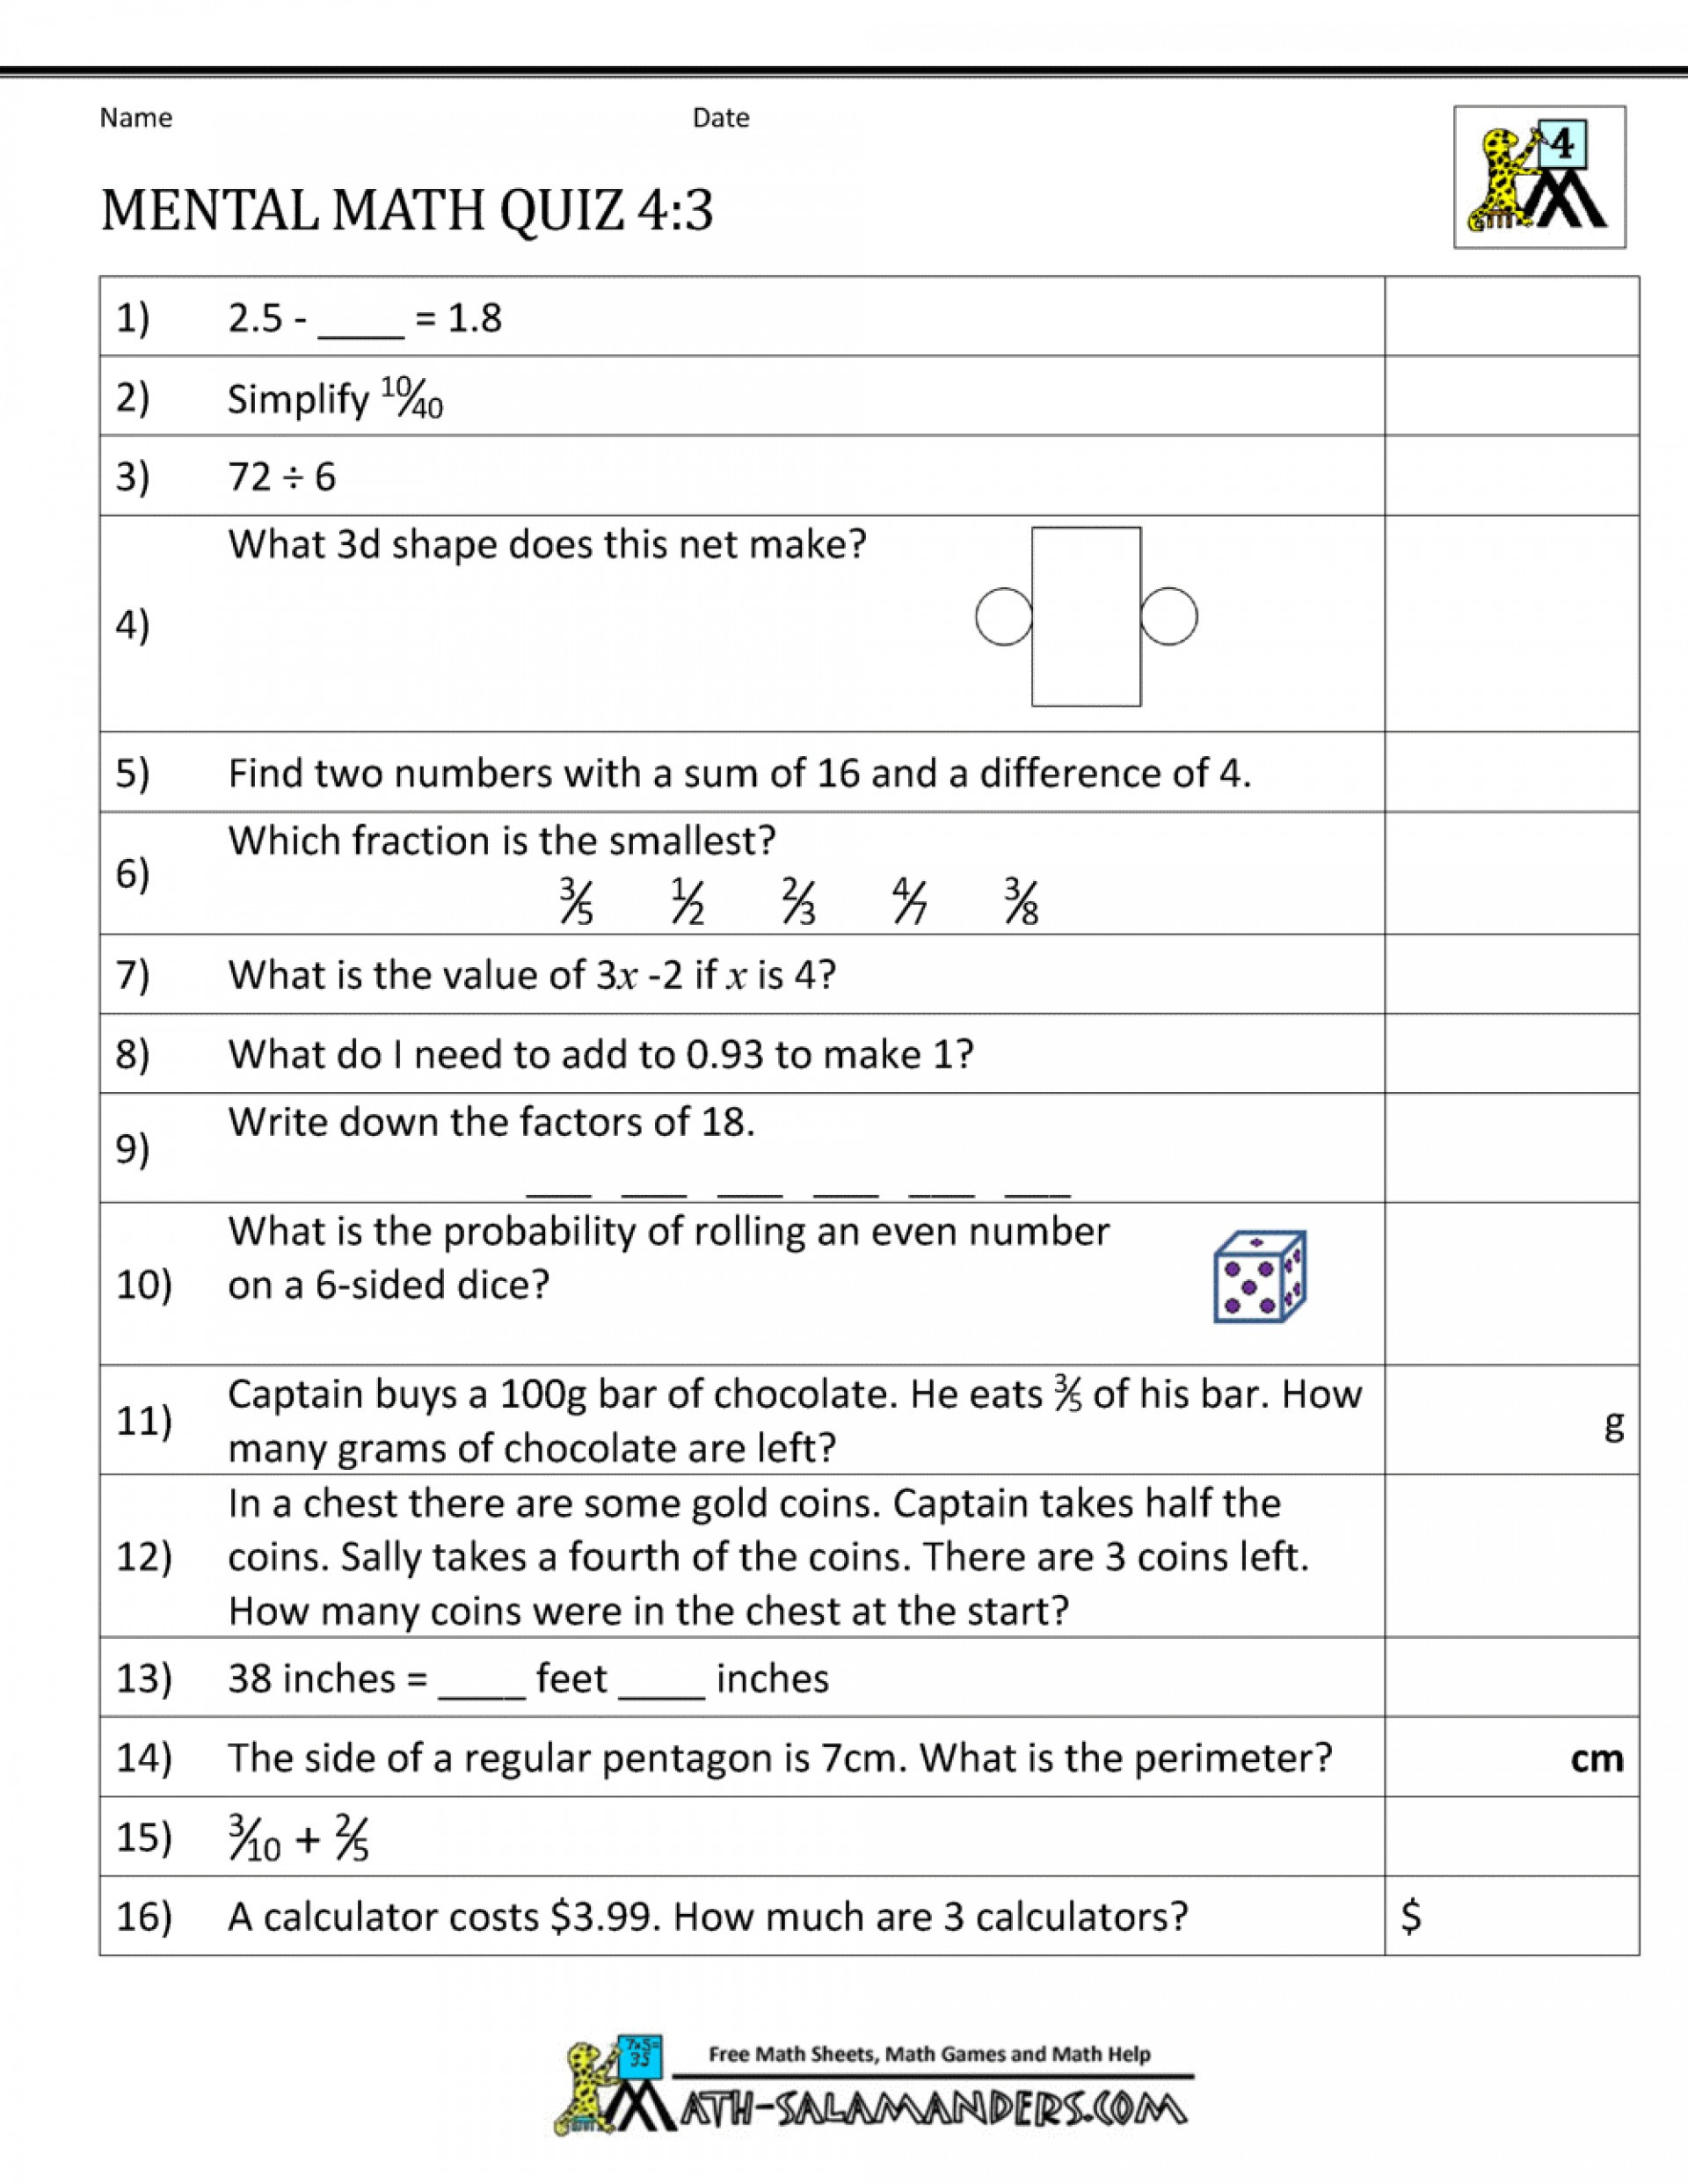 Free Math Worksheets Second Grade 2 Addition Adding 2 Digit Plus 1 Digit